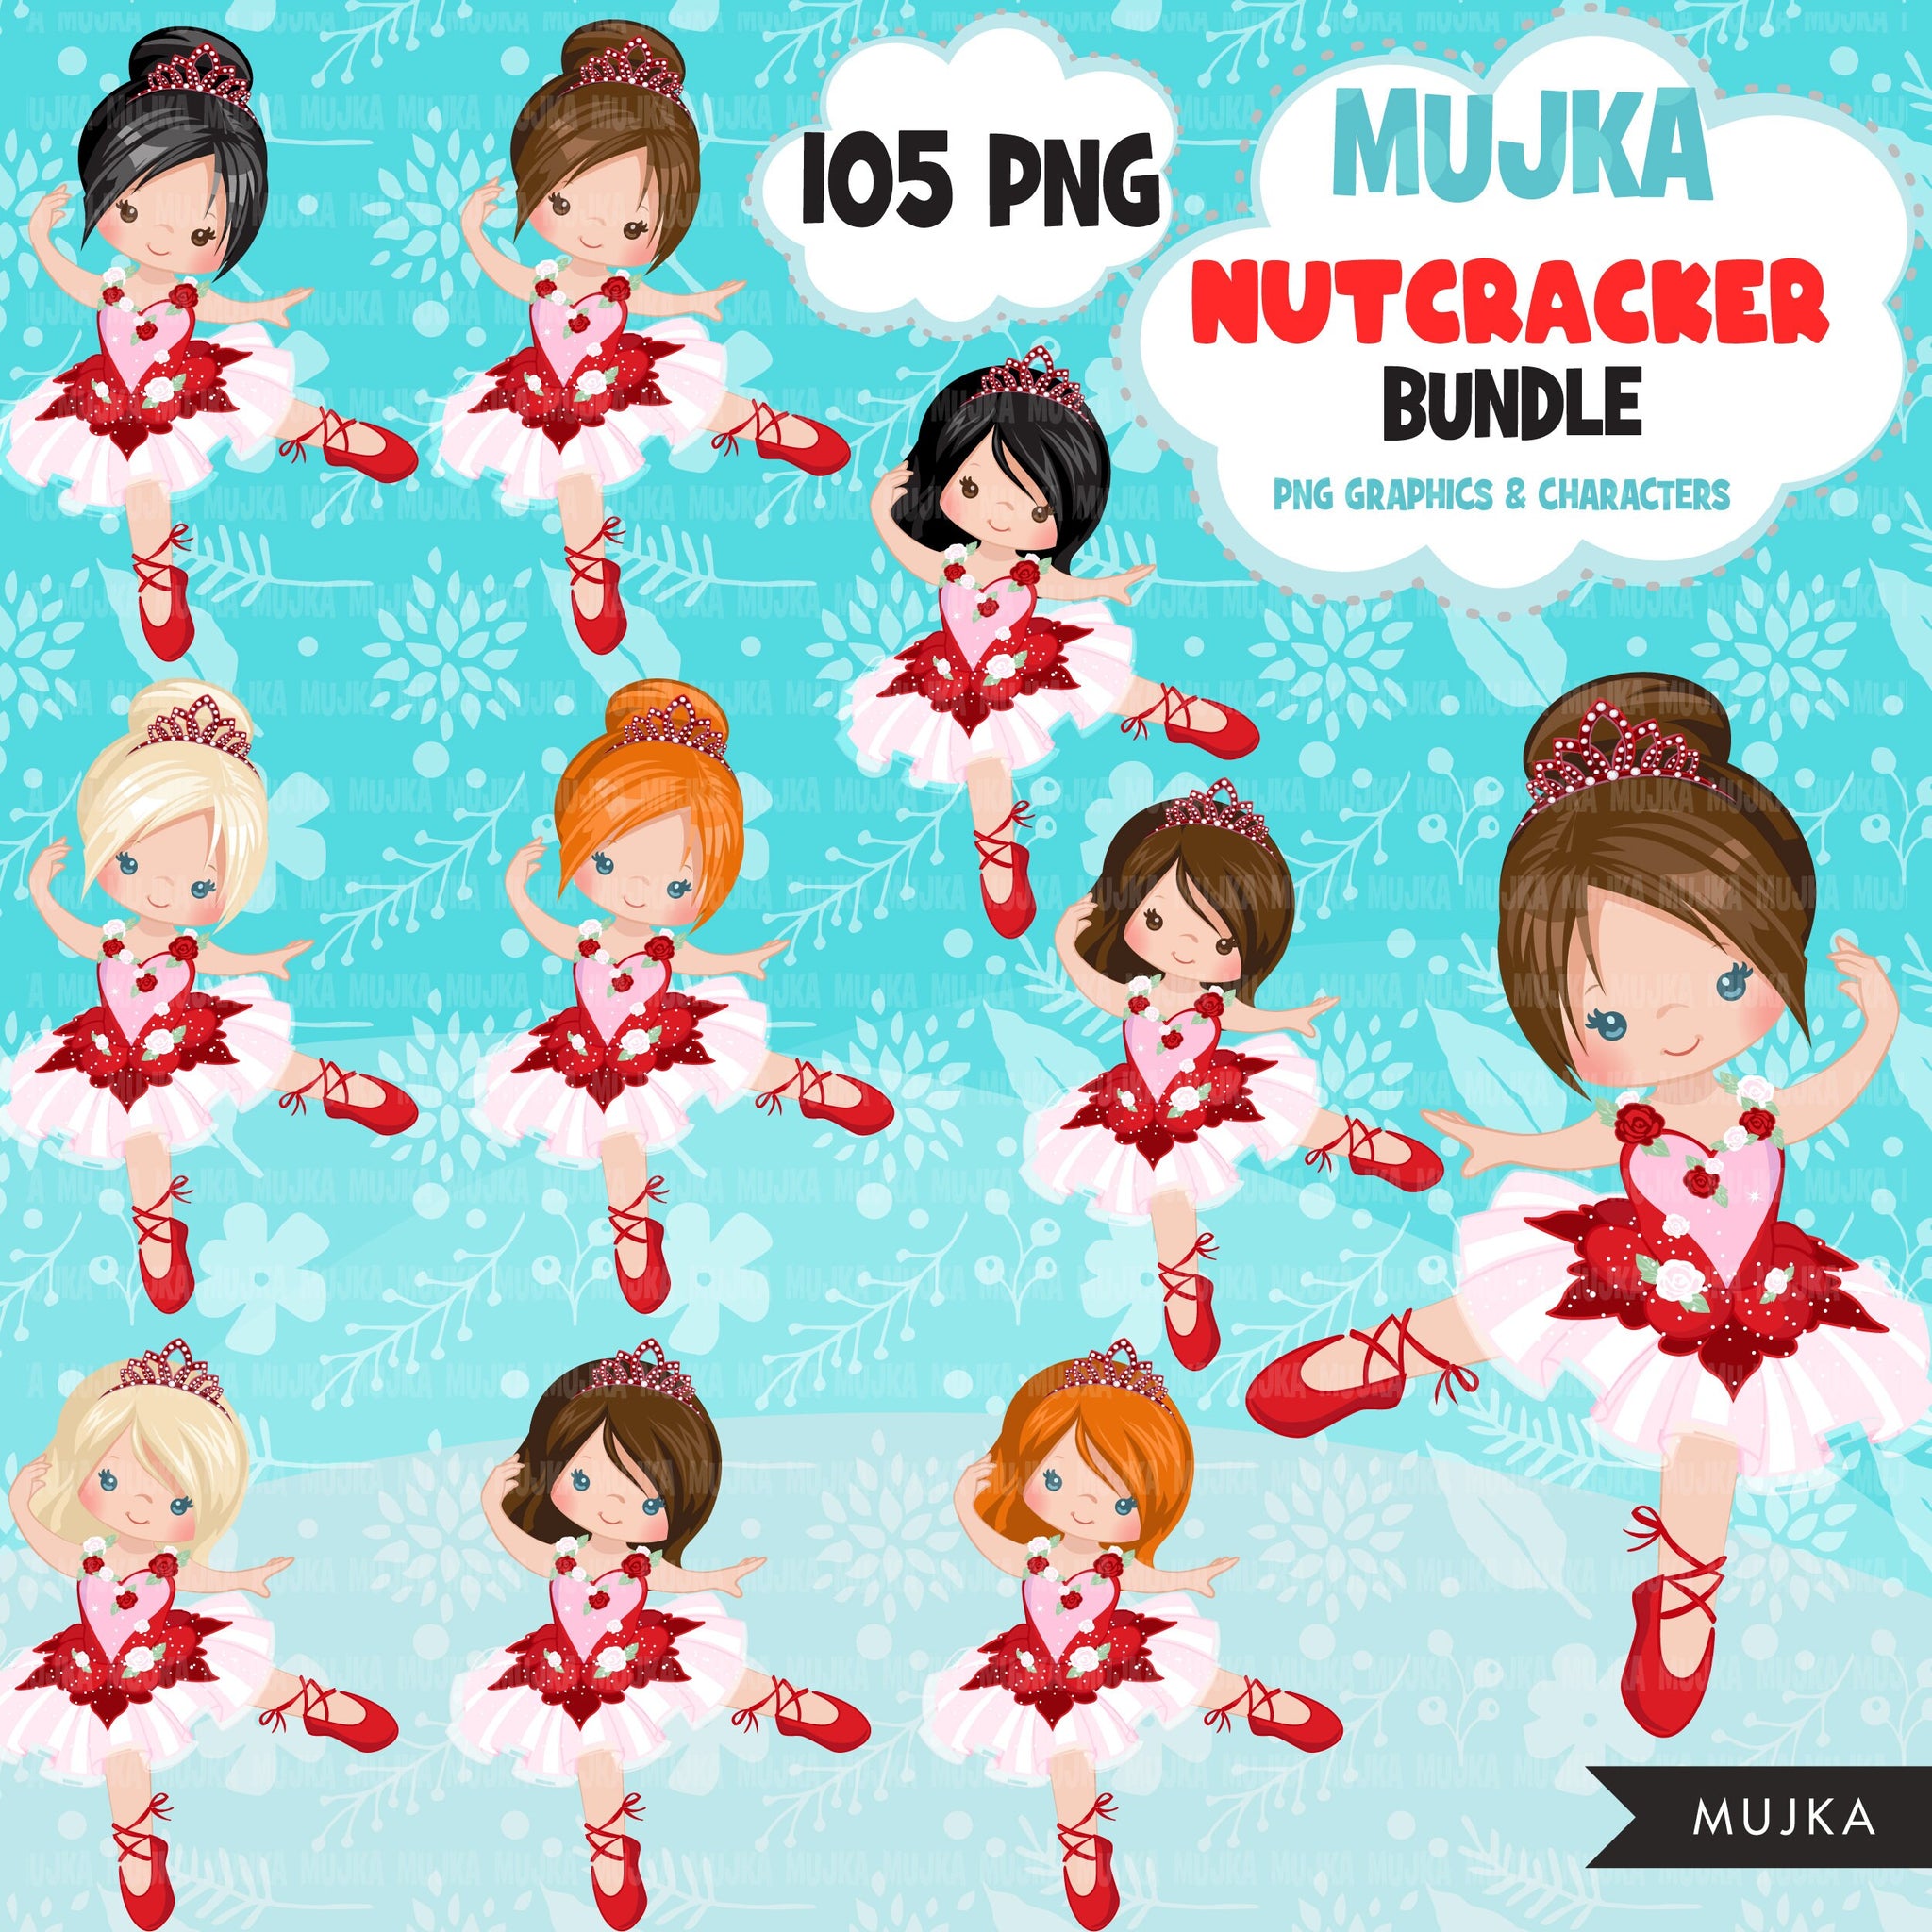 Nutcracker PNG, Nutcracker clipart Bundle, Christmas characters, Mouse King, Sugar Plum fairy, Clara png, Christmas ballet, toy soldiers